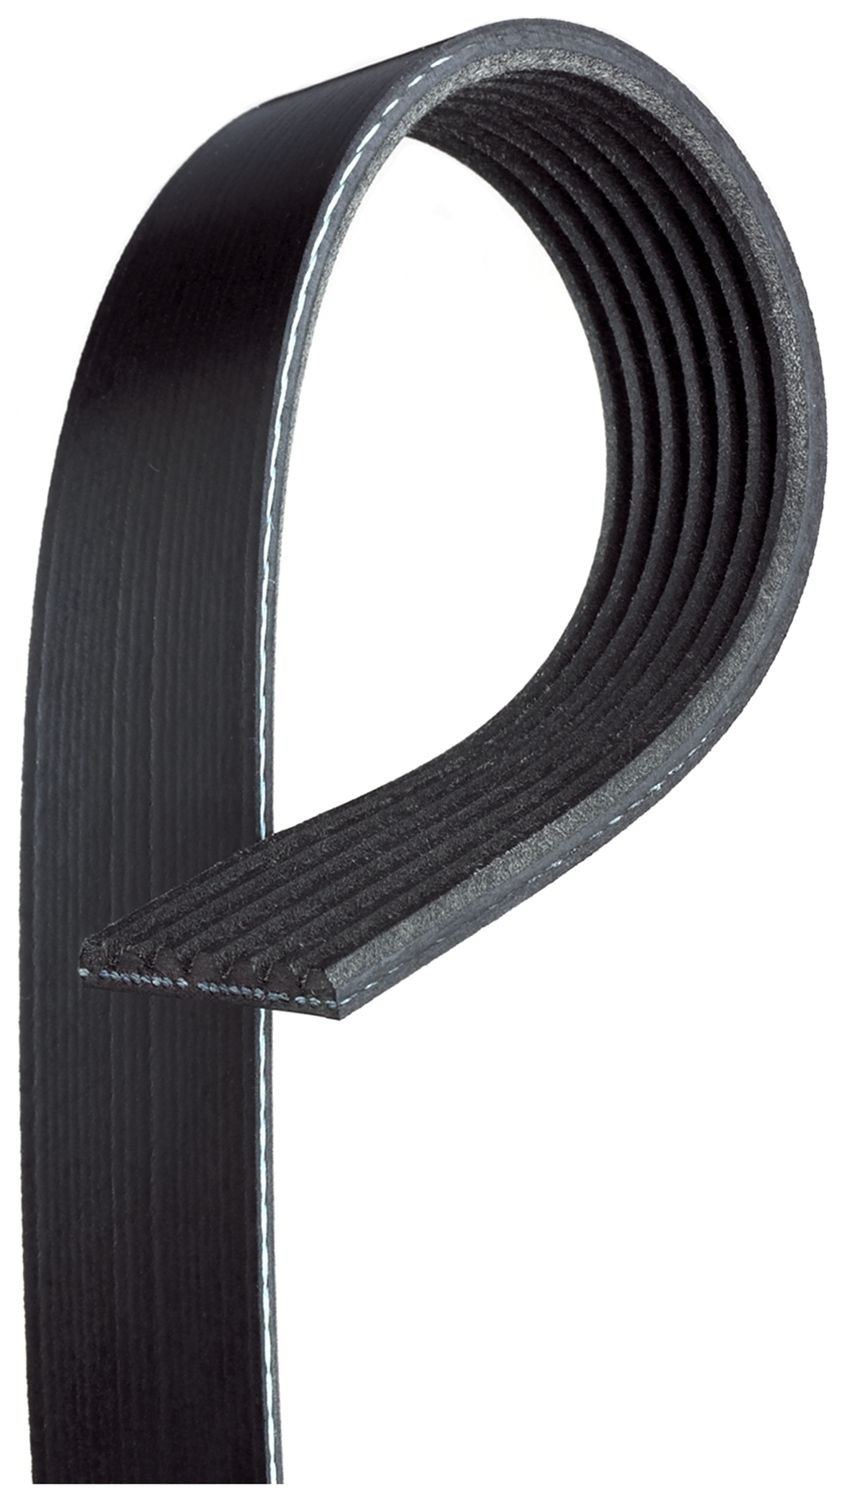 GATES 7PK2060 Serpentine belt 2060mm, 7, G-Force™ C12™ CVT Belt